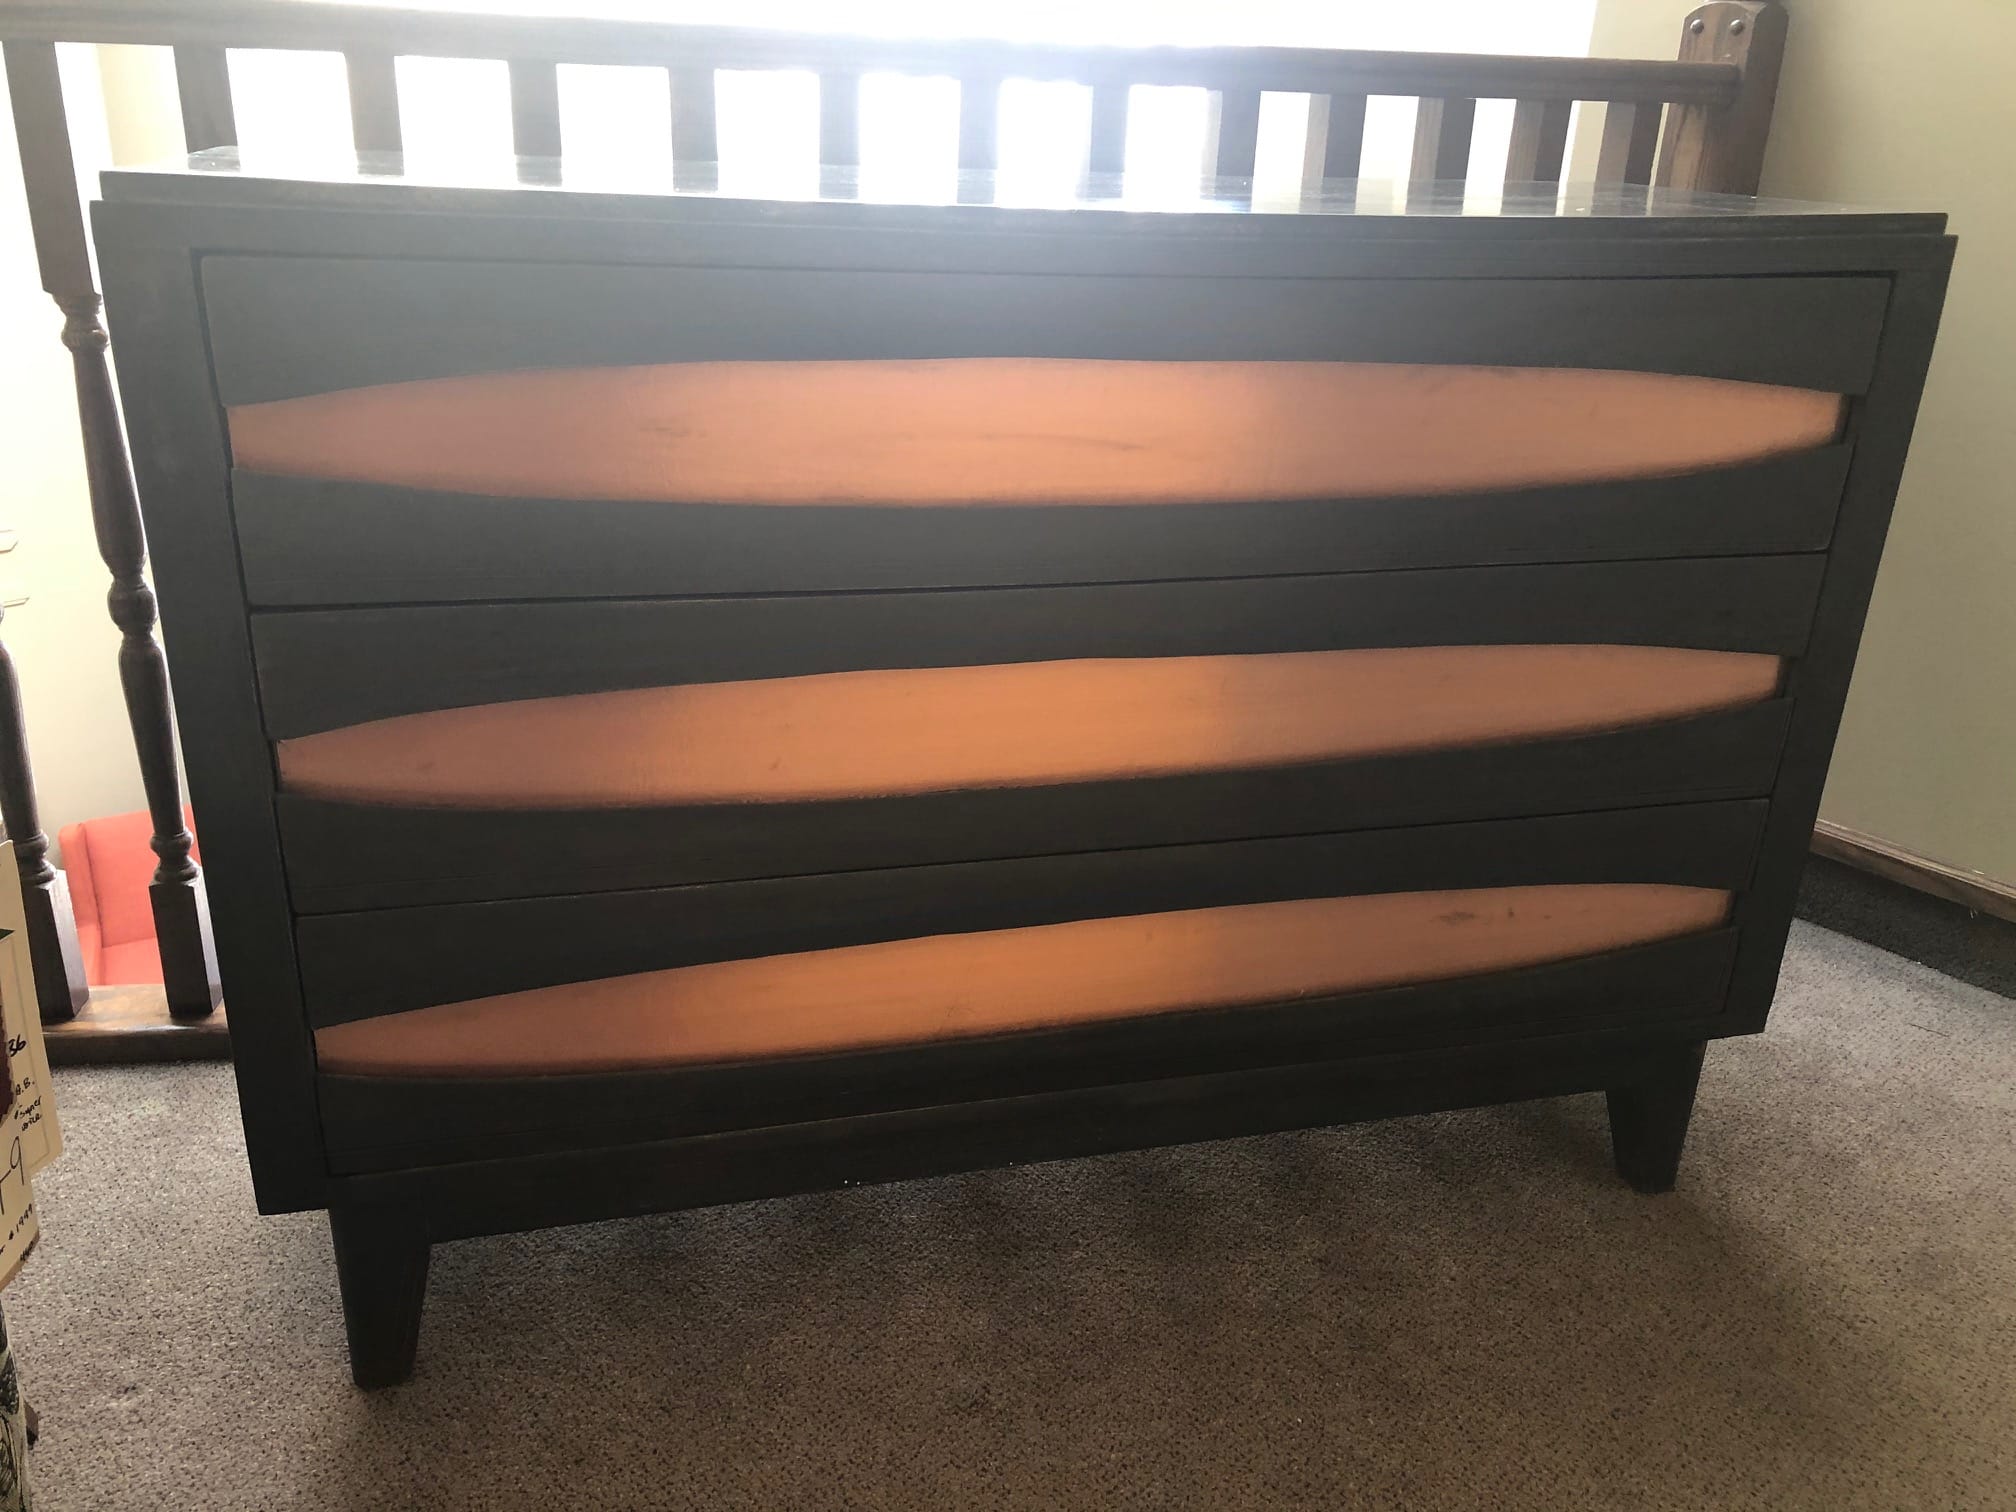 three drawer chest